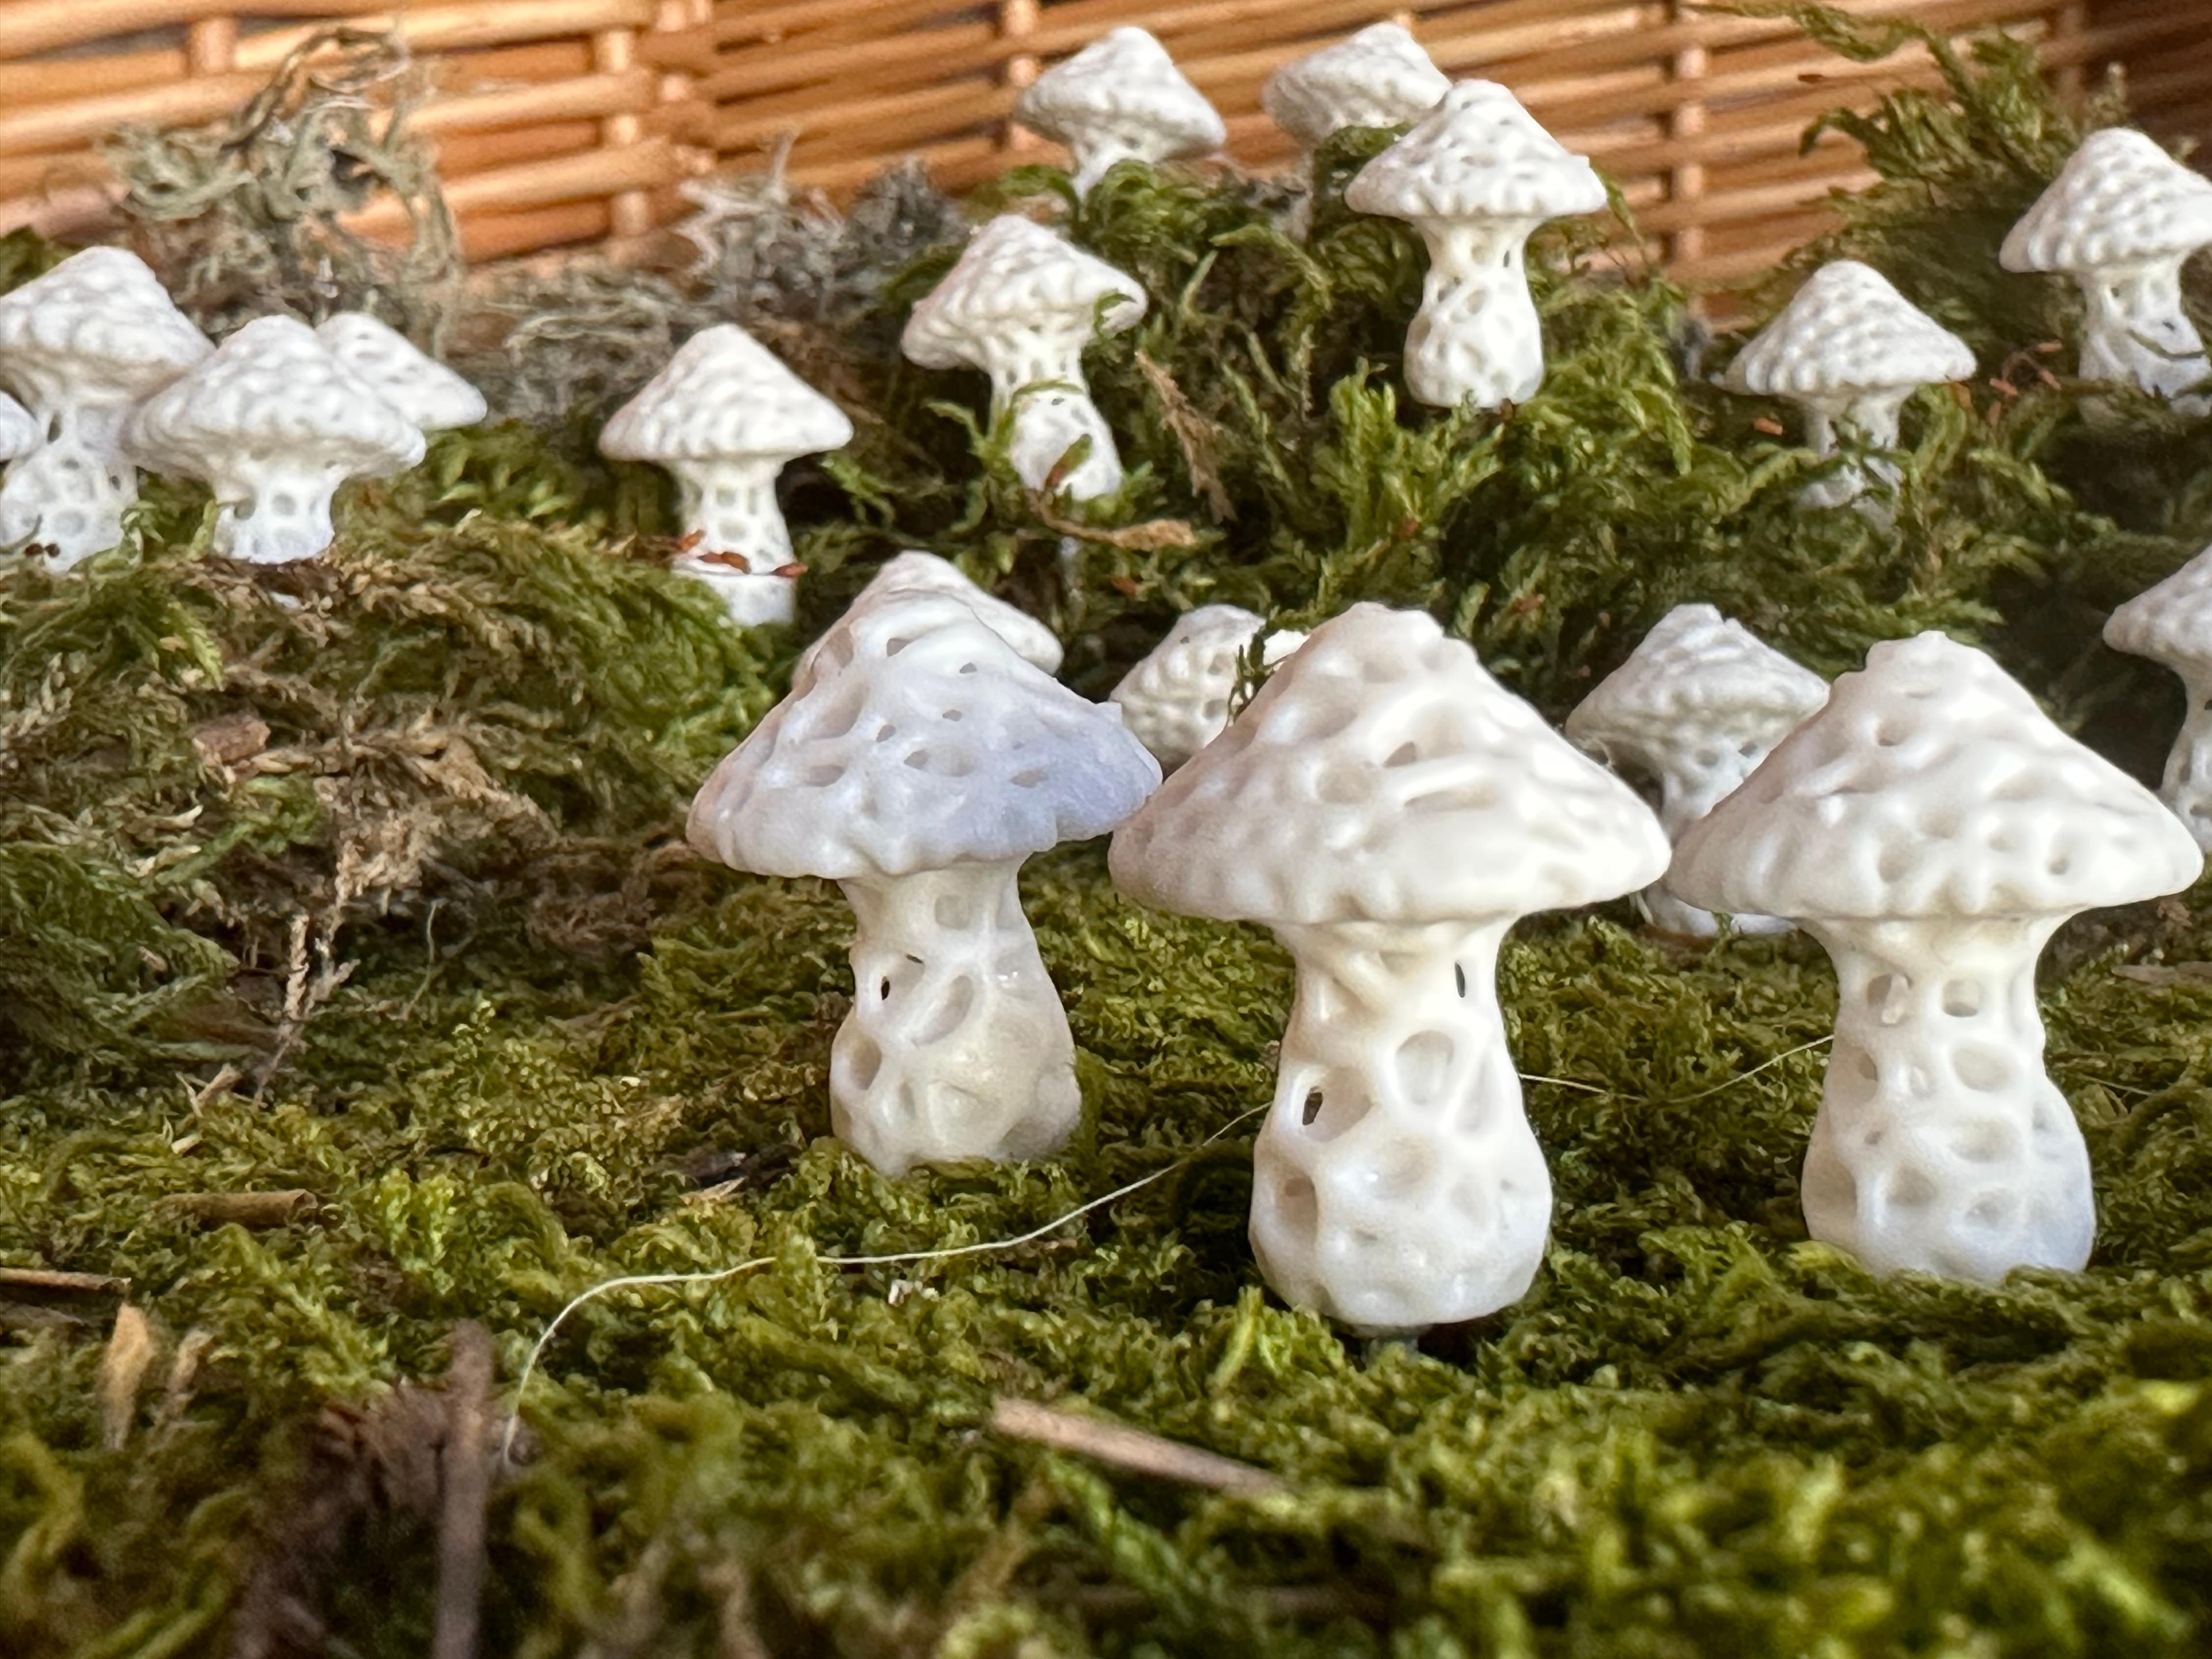 Stochastic Mushroom Magnets (Small) 3d model